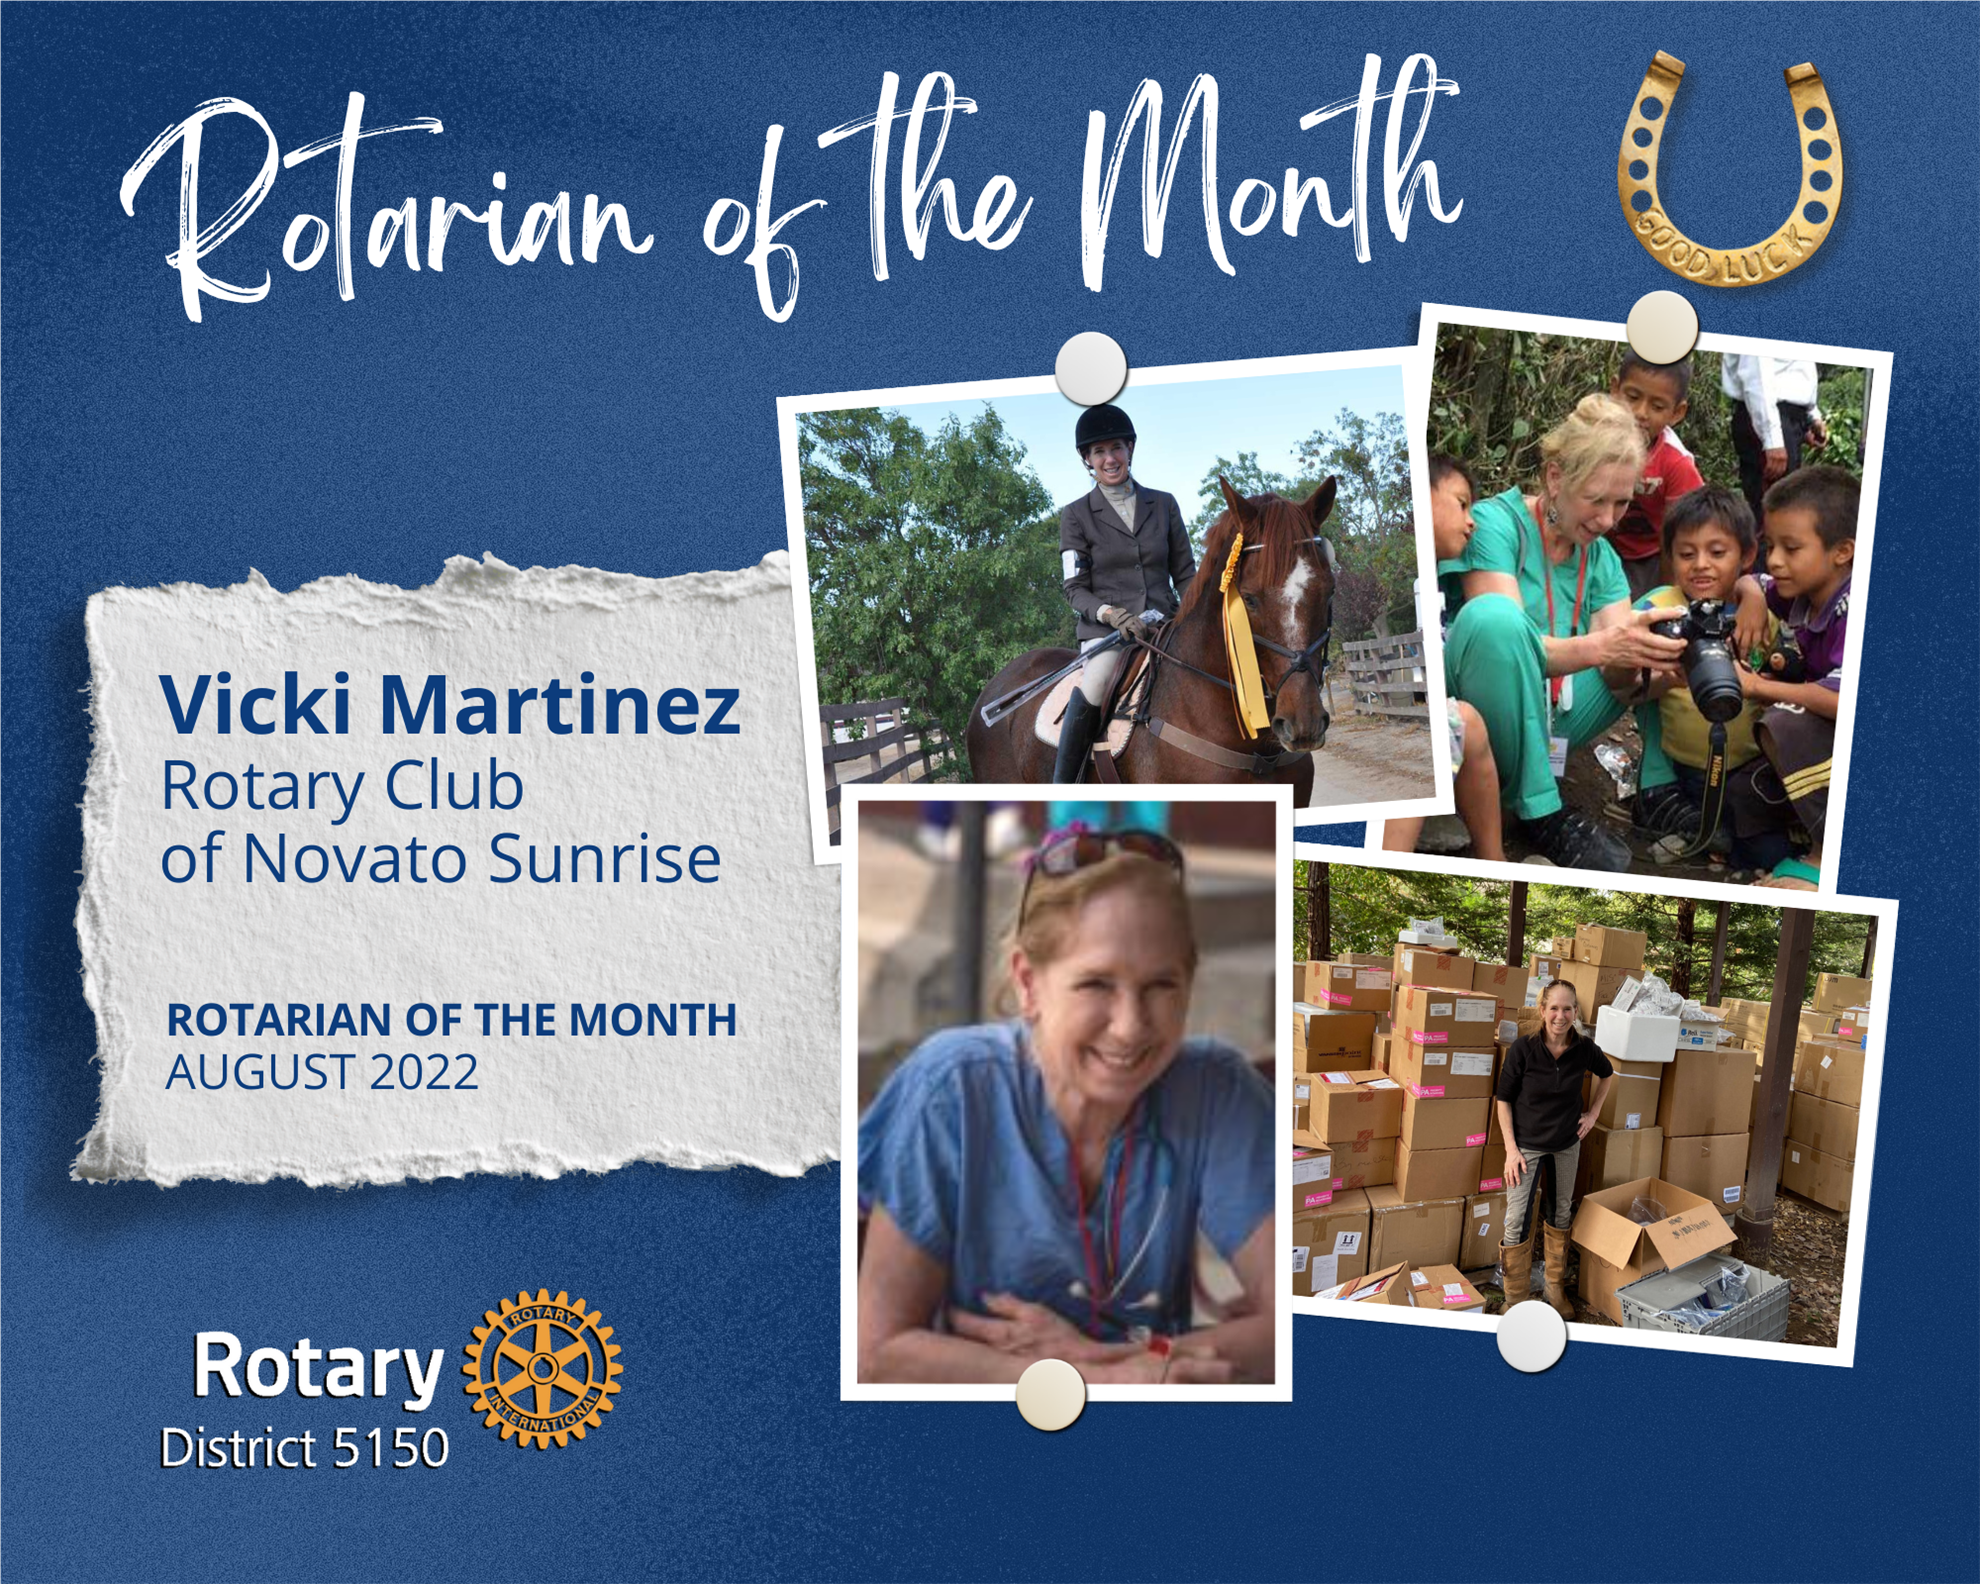 Rotarian of the Month, Vicki Martinez